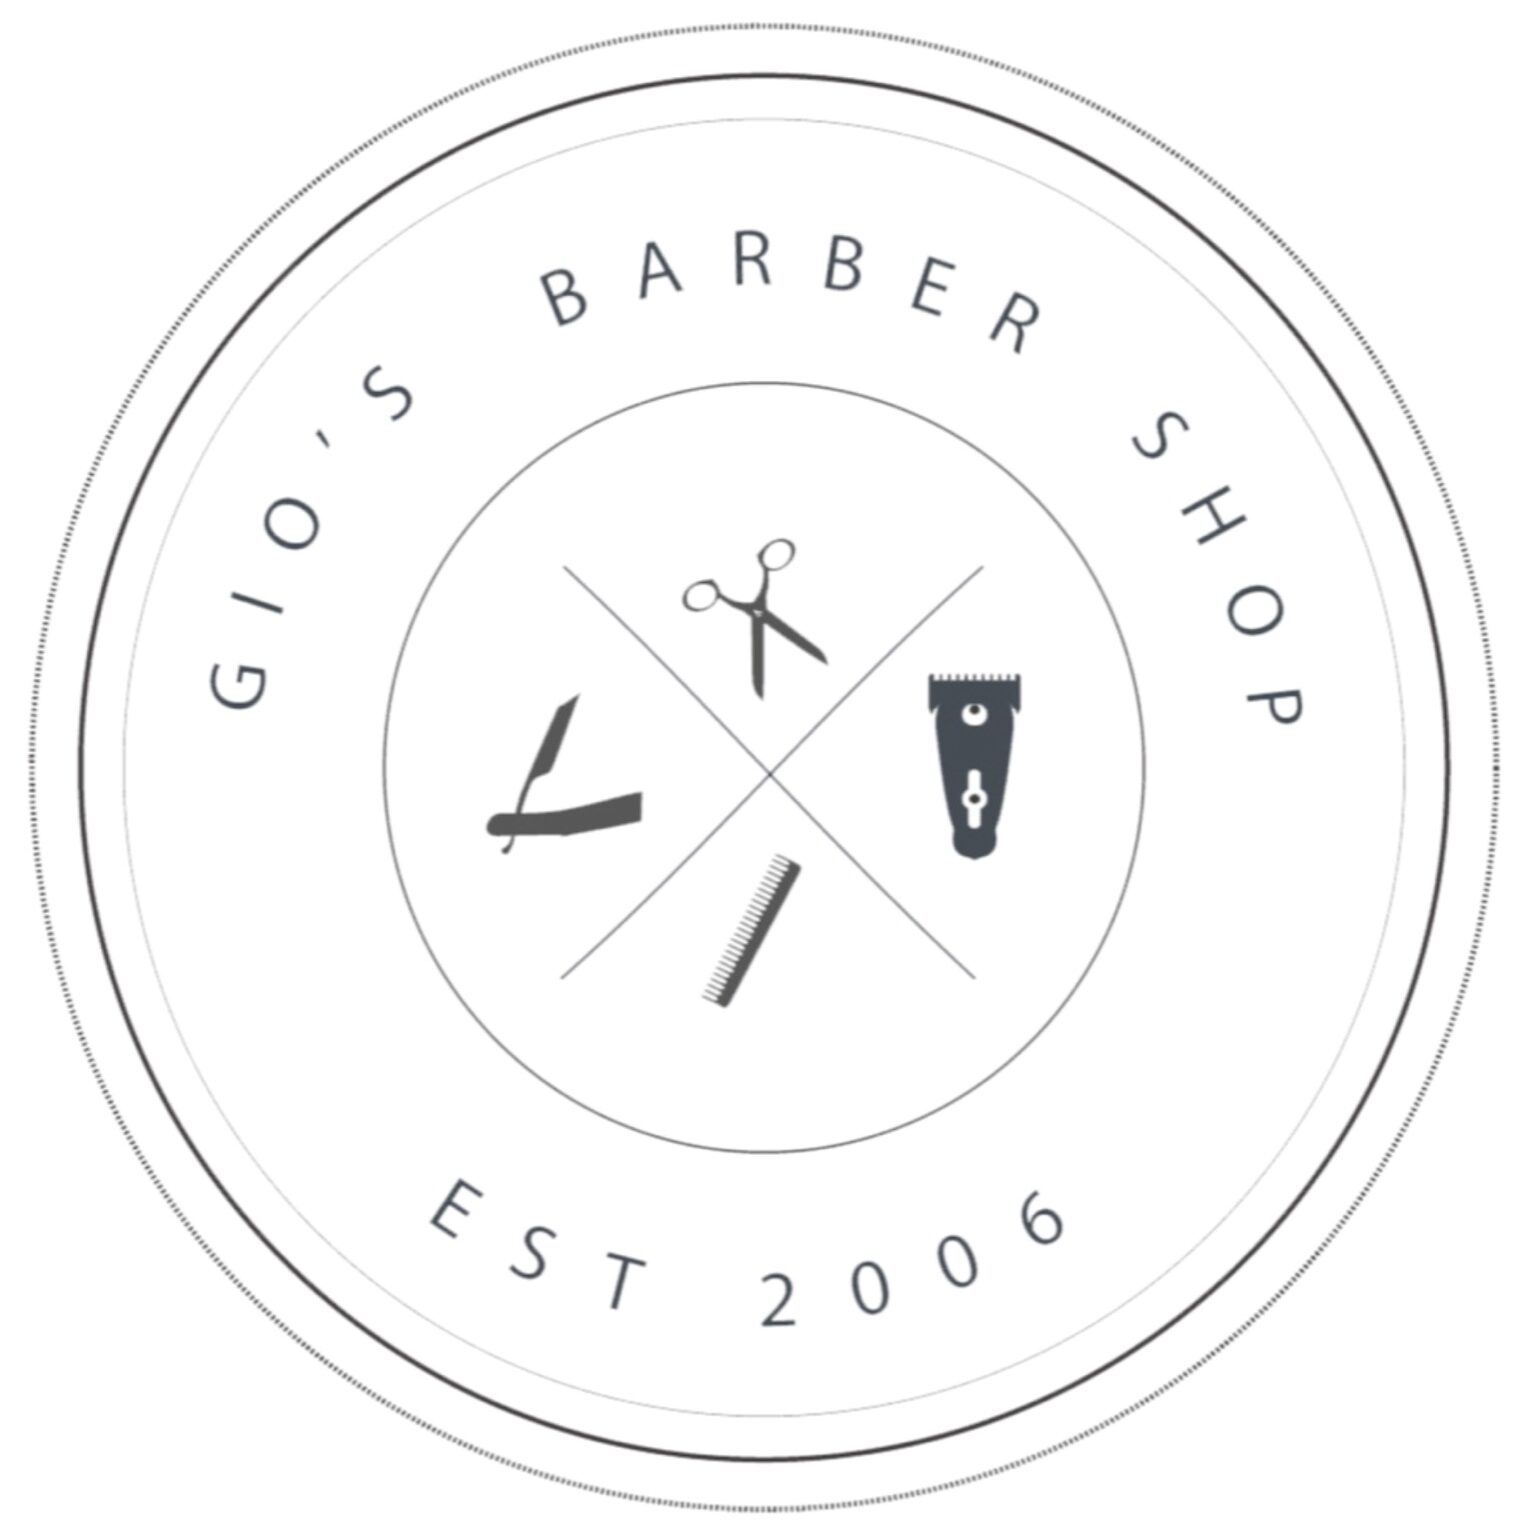 Gio's Barber